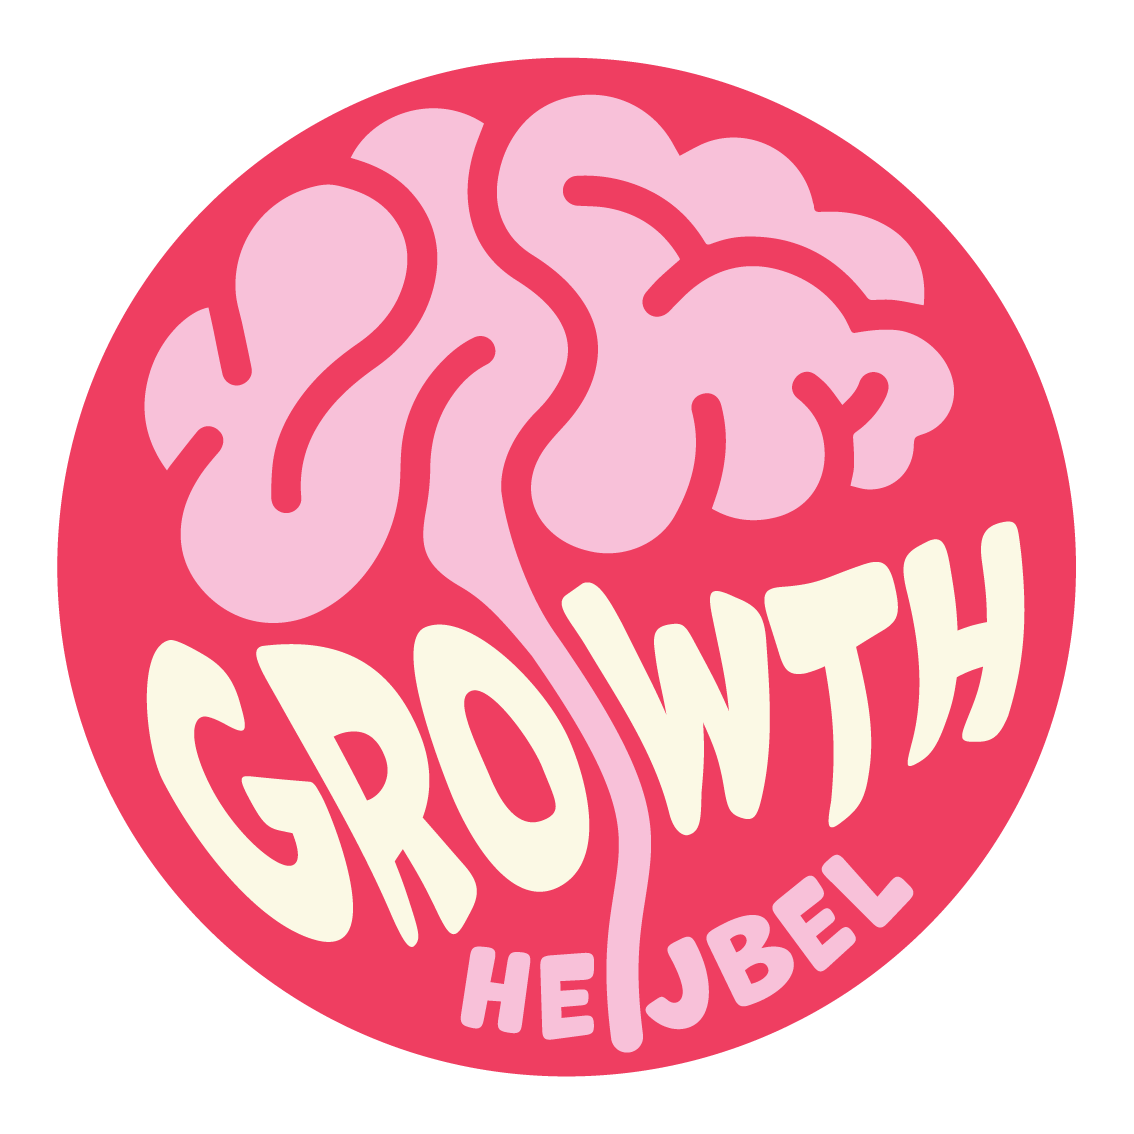 Heijbel Growth